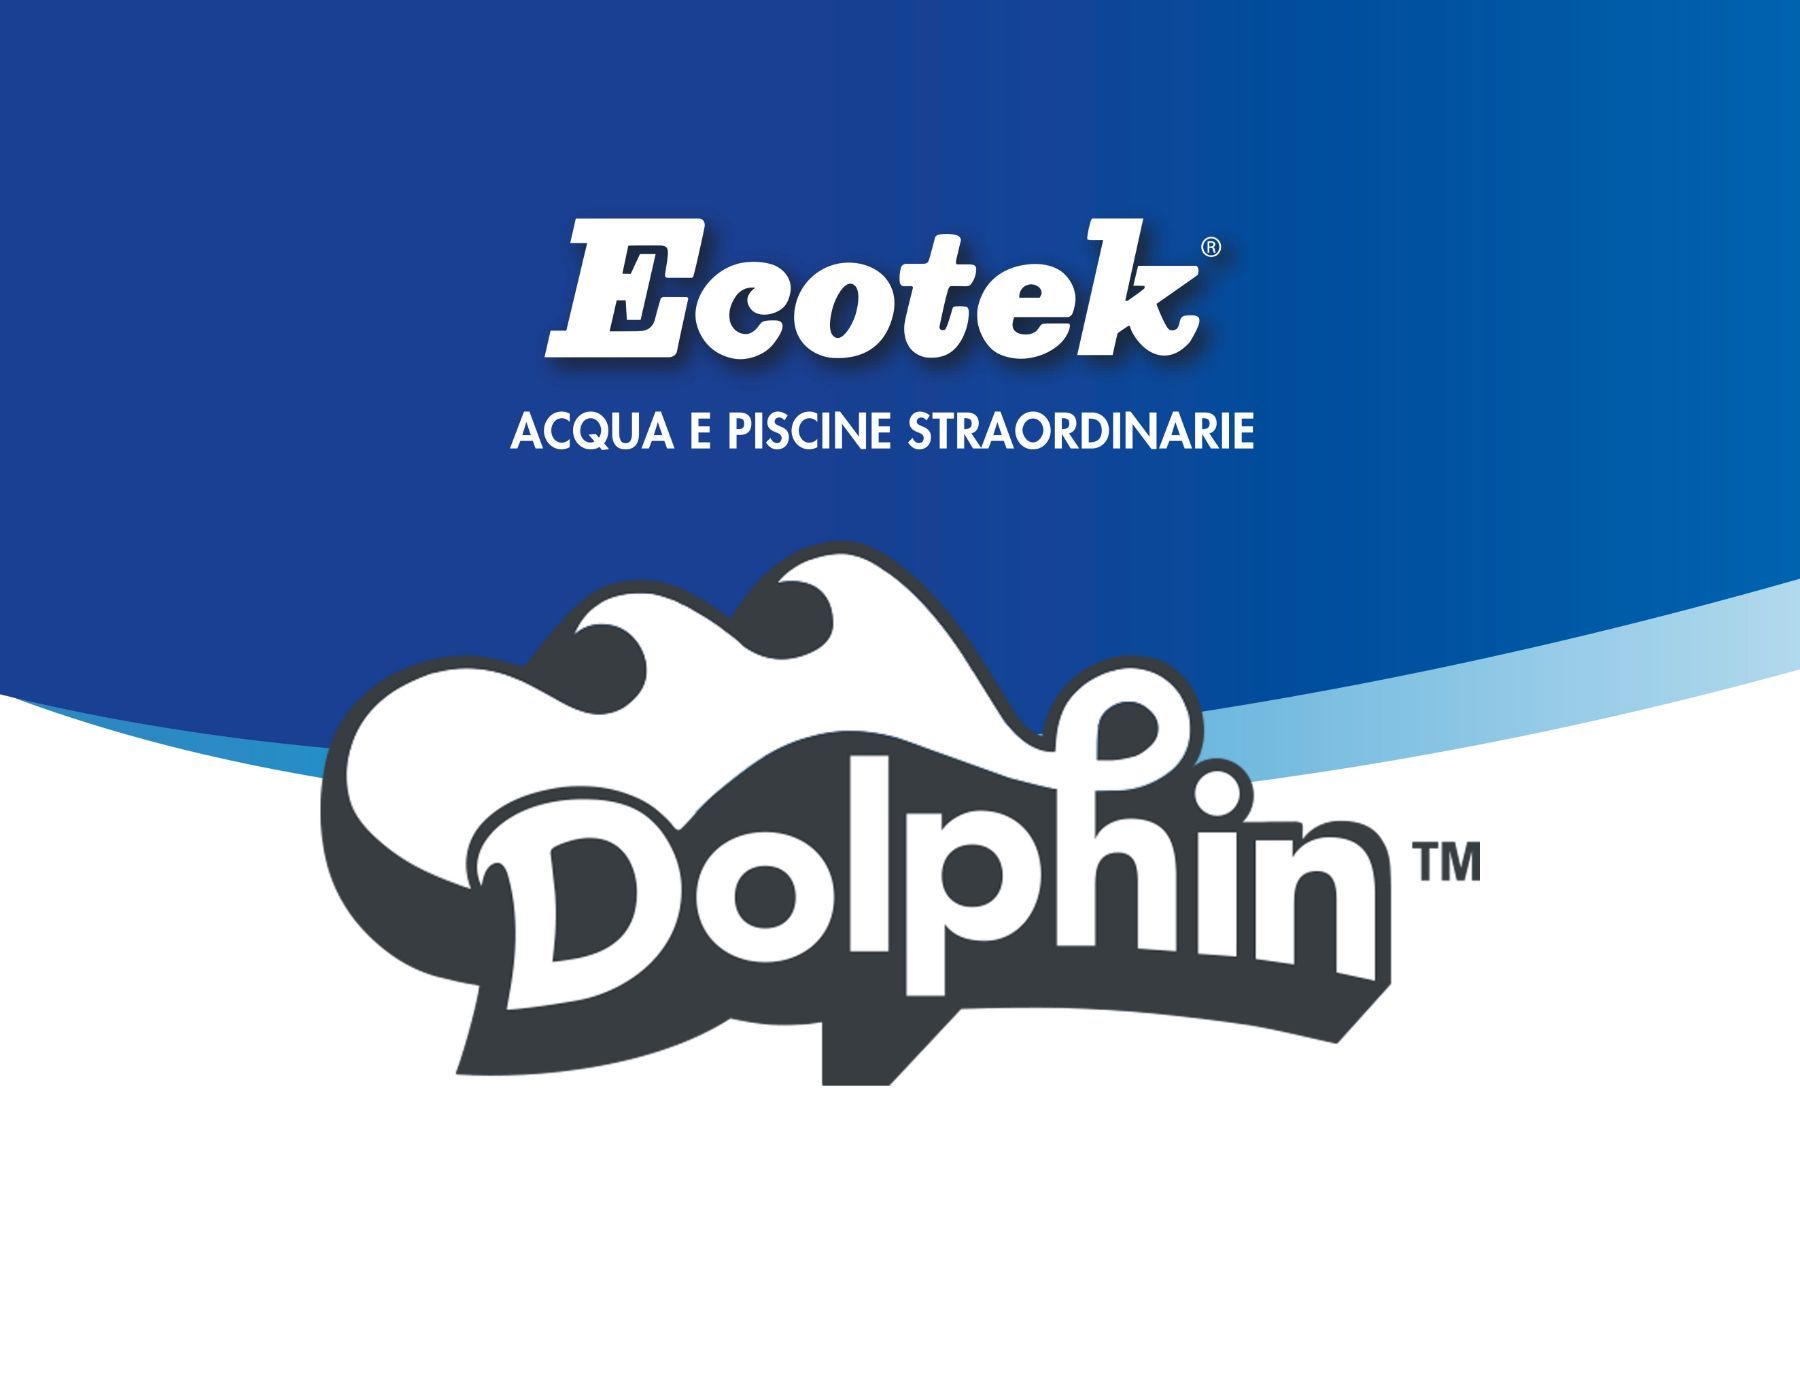 Dolphin Ecotek marchi